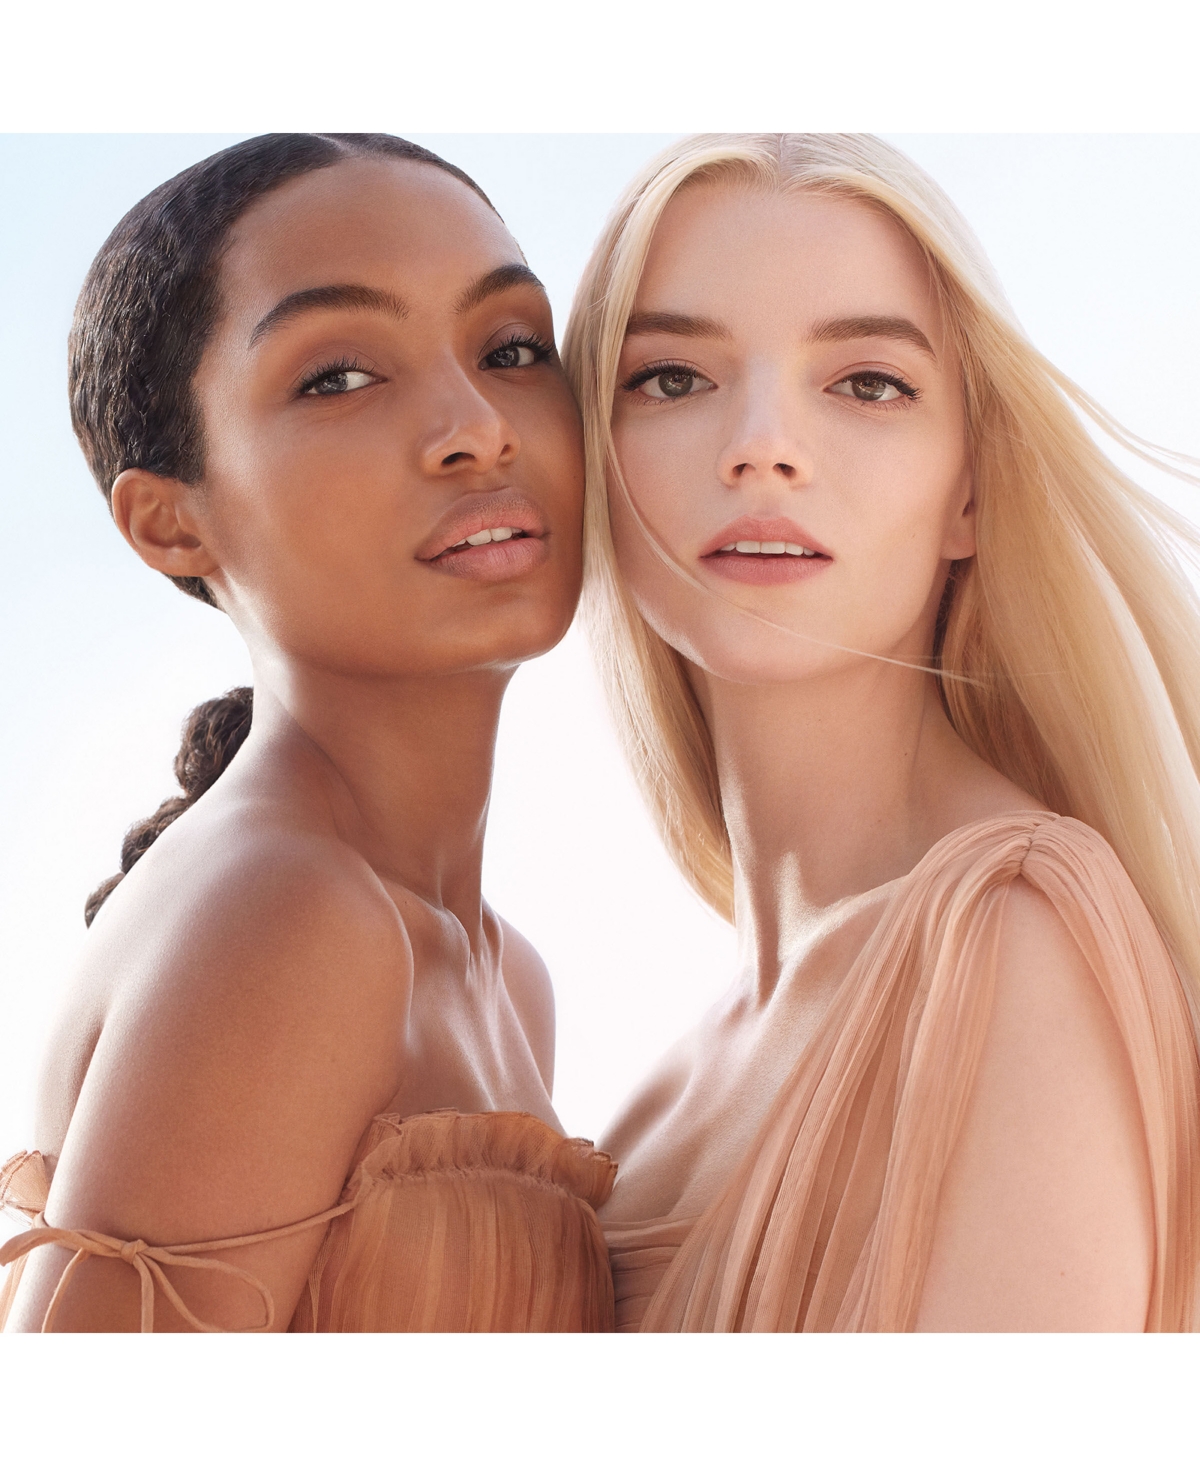 Shop Dior Forever Skin Glow Hydrating Foundation Spf 15 In Warm Peach (light To Medium Skin With Wa